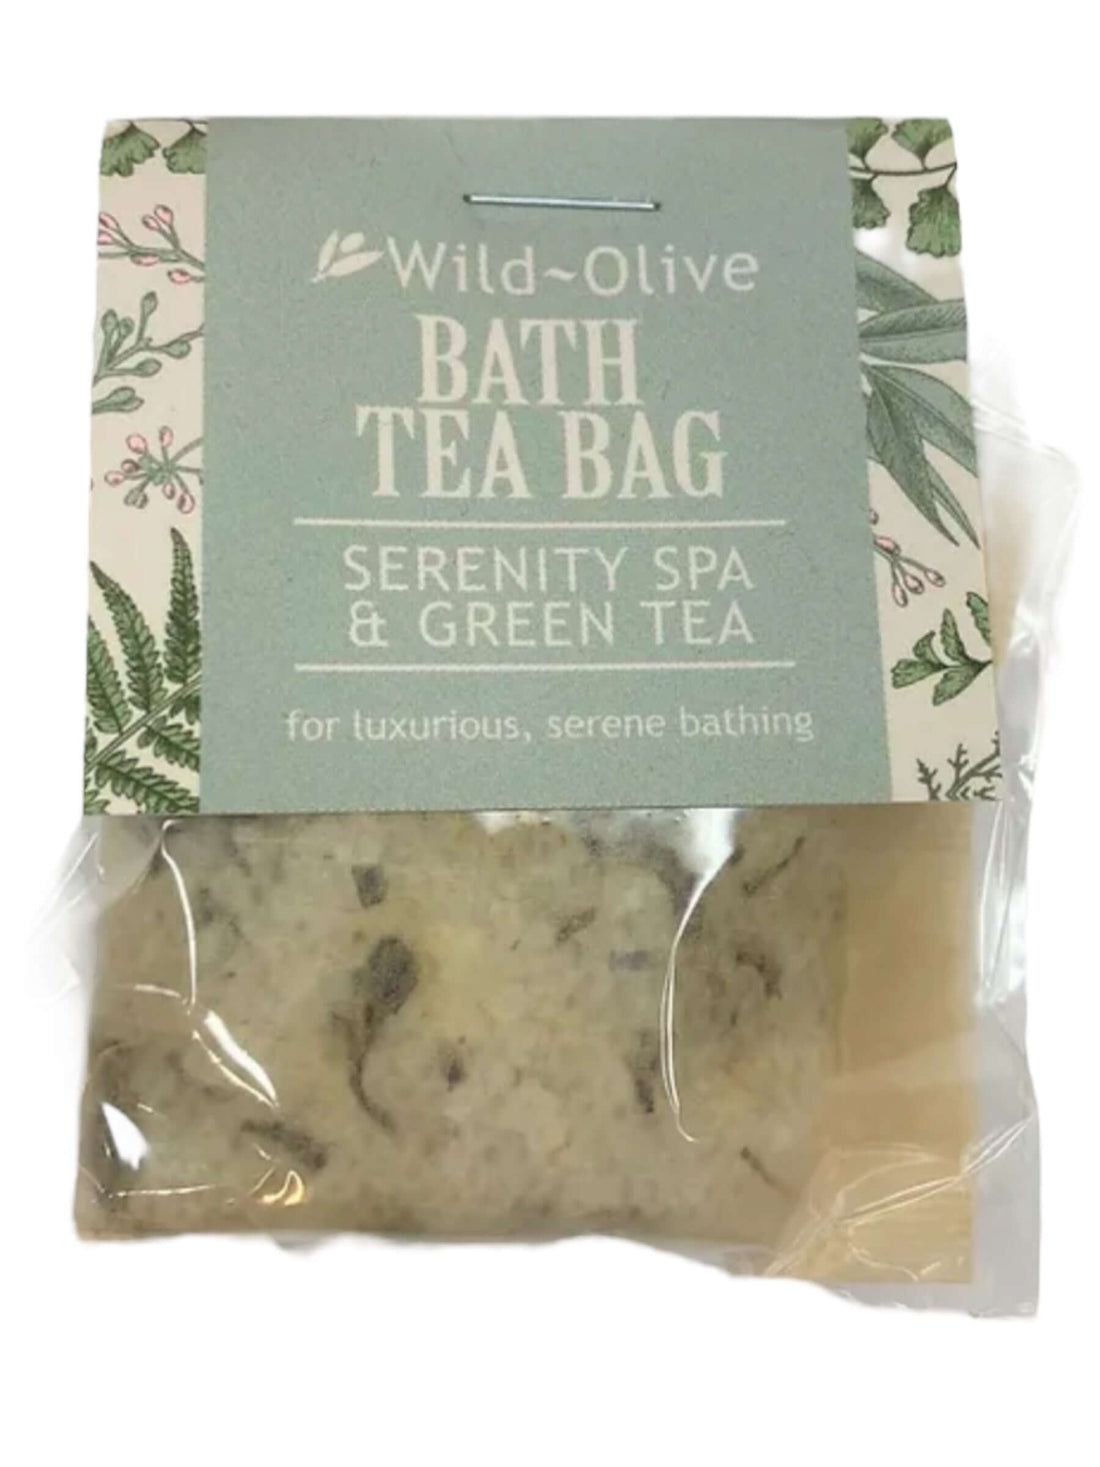 Serenity Spa &amp; Green Tea Bath Tea Bag